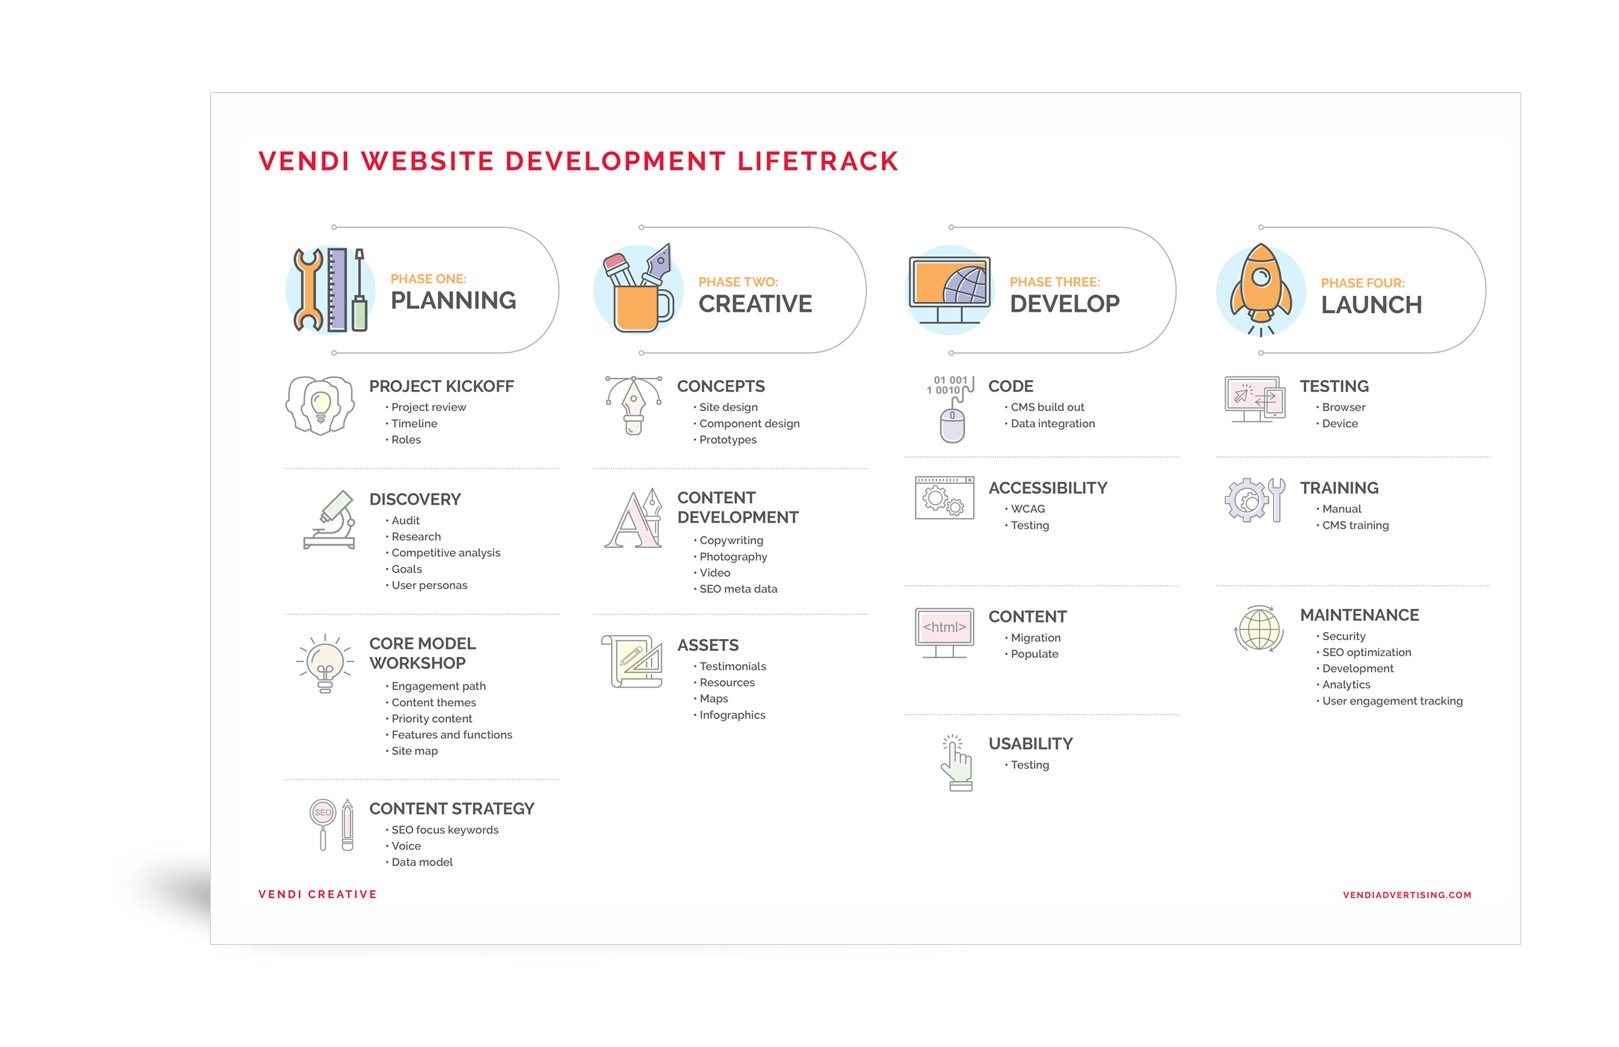 Vendi’s website development lifetrack document illustrating the planning, creative, development and launch phases